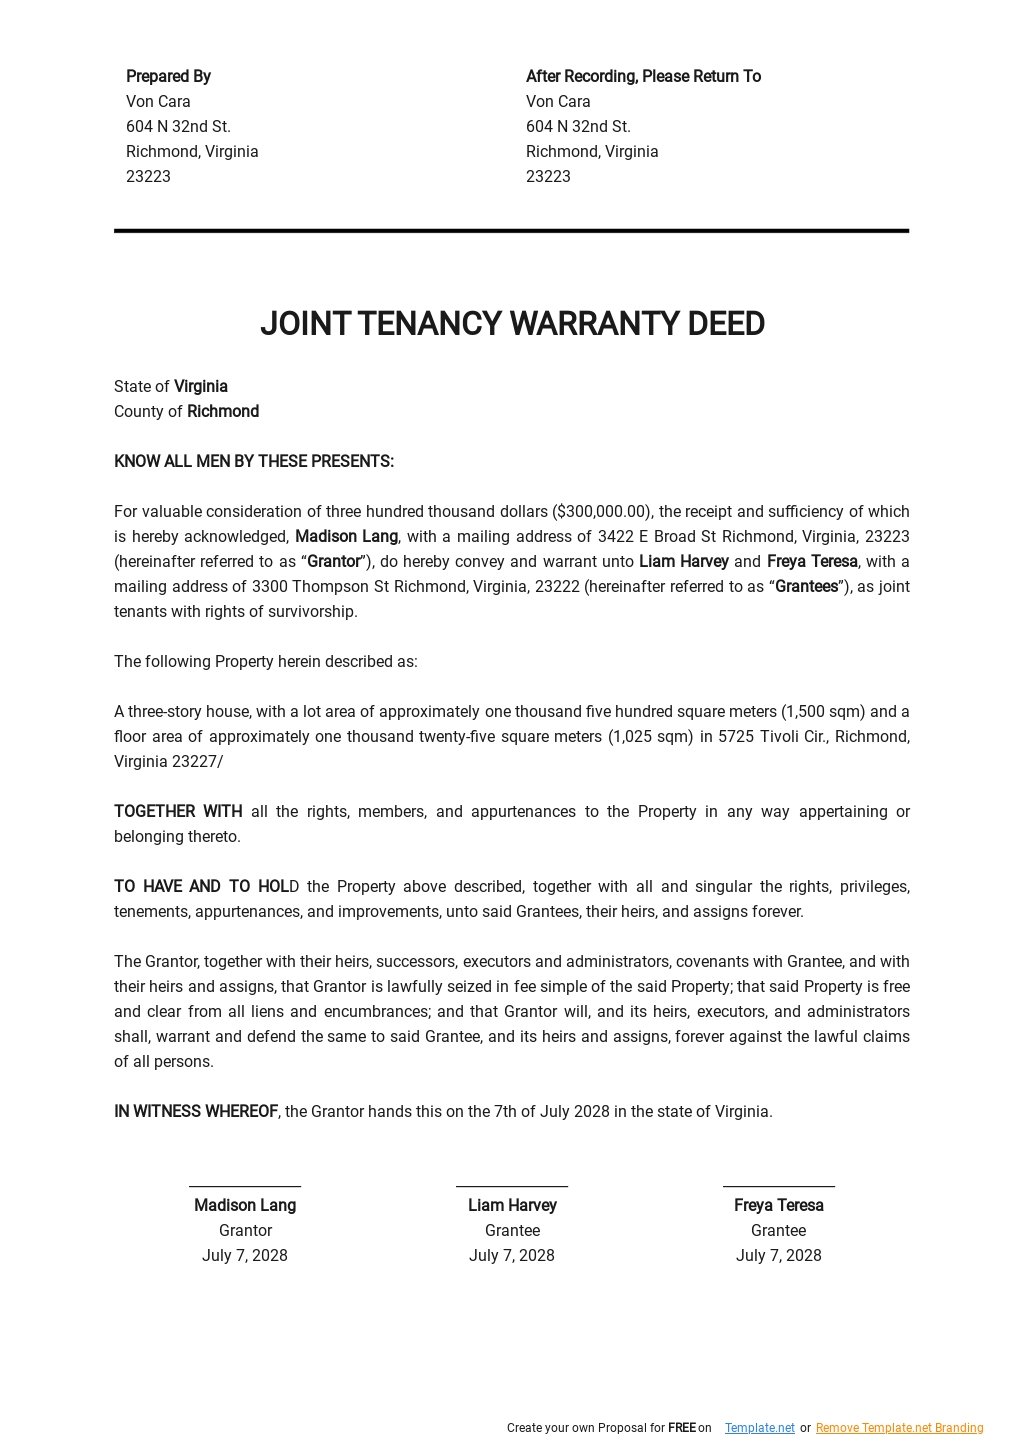 Joint Tenancy Warranty Deed Template Google Docs Word Apple Pages